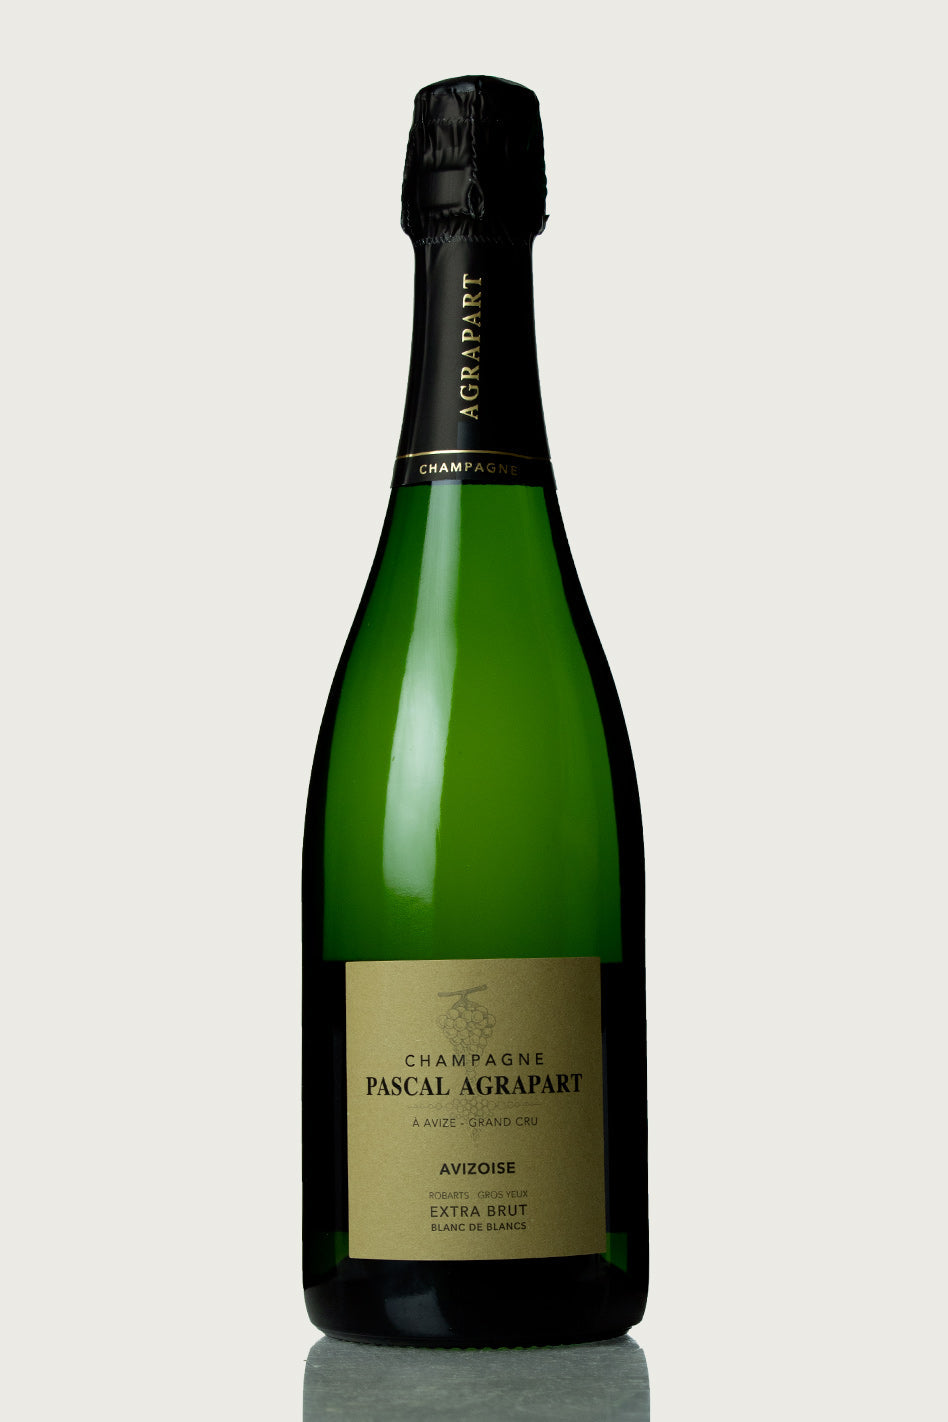 Agrapart Champagne Grand Cru 'Avizoise' 2017